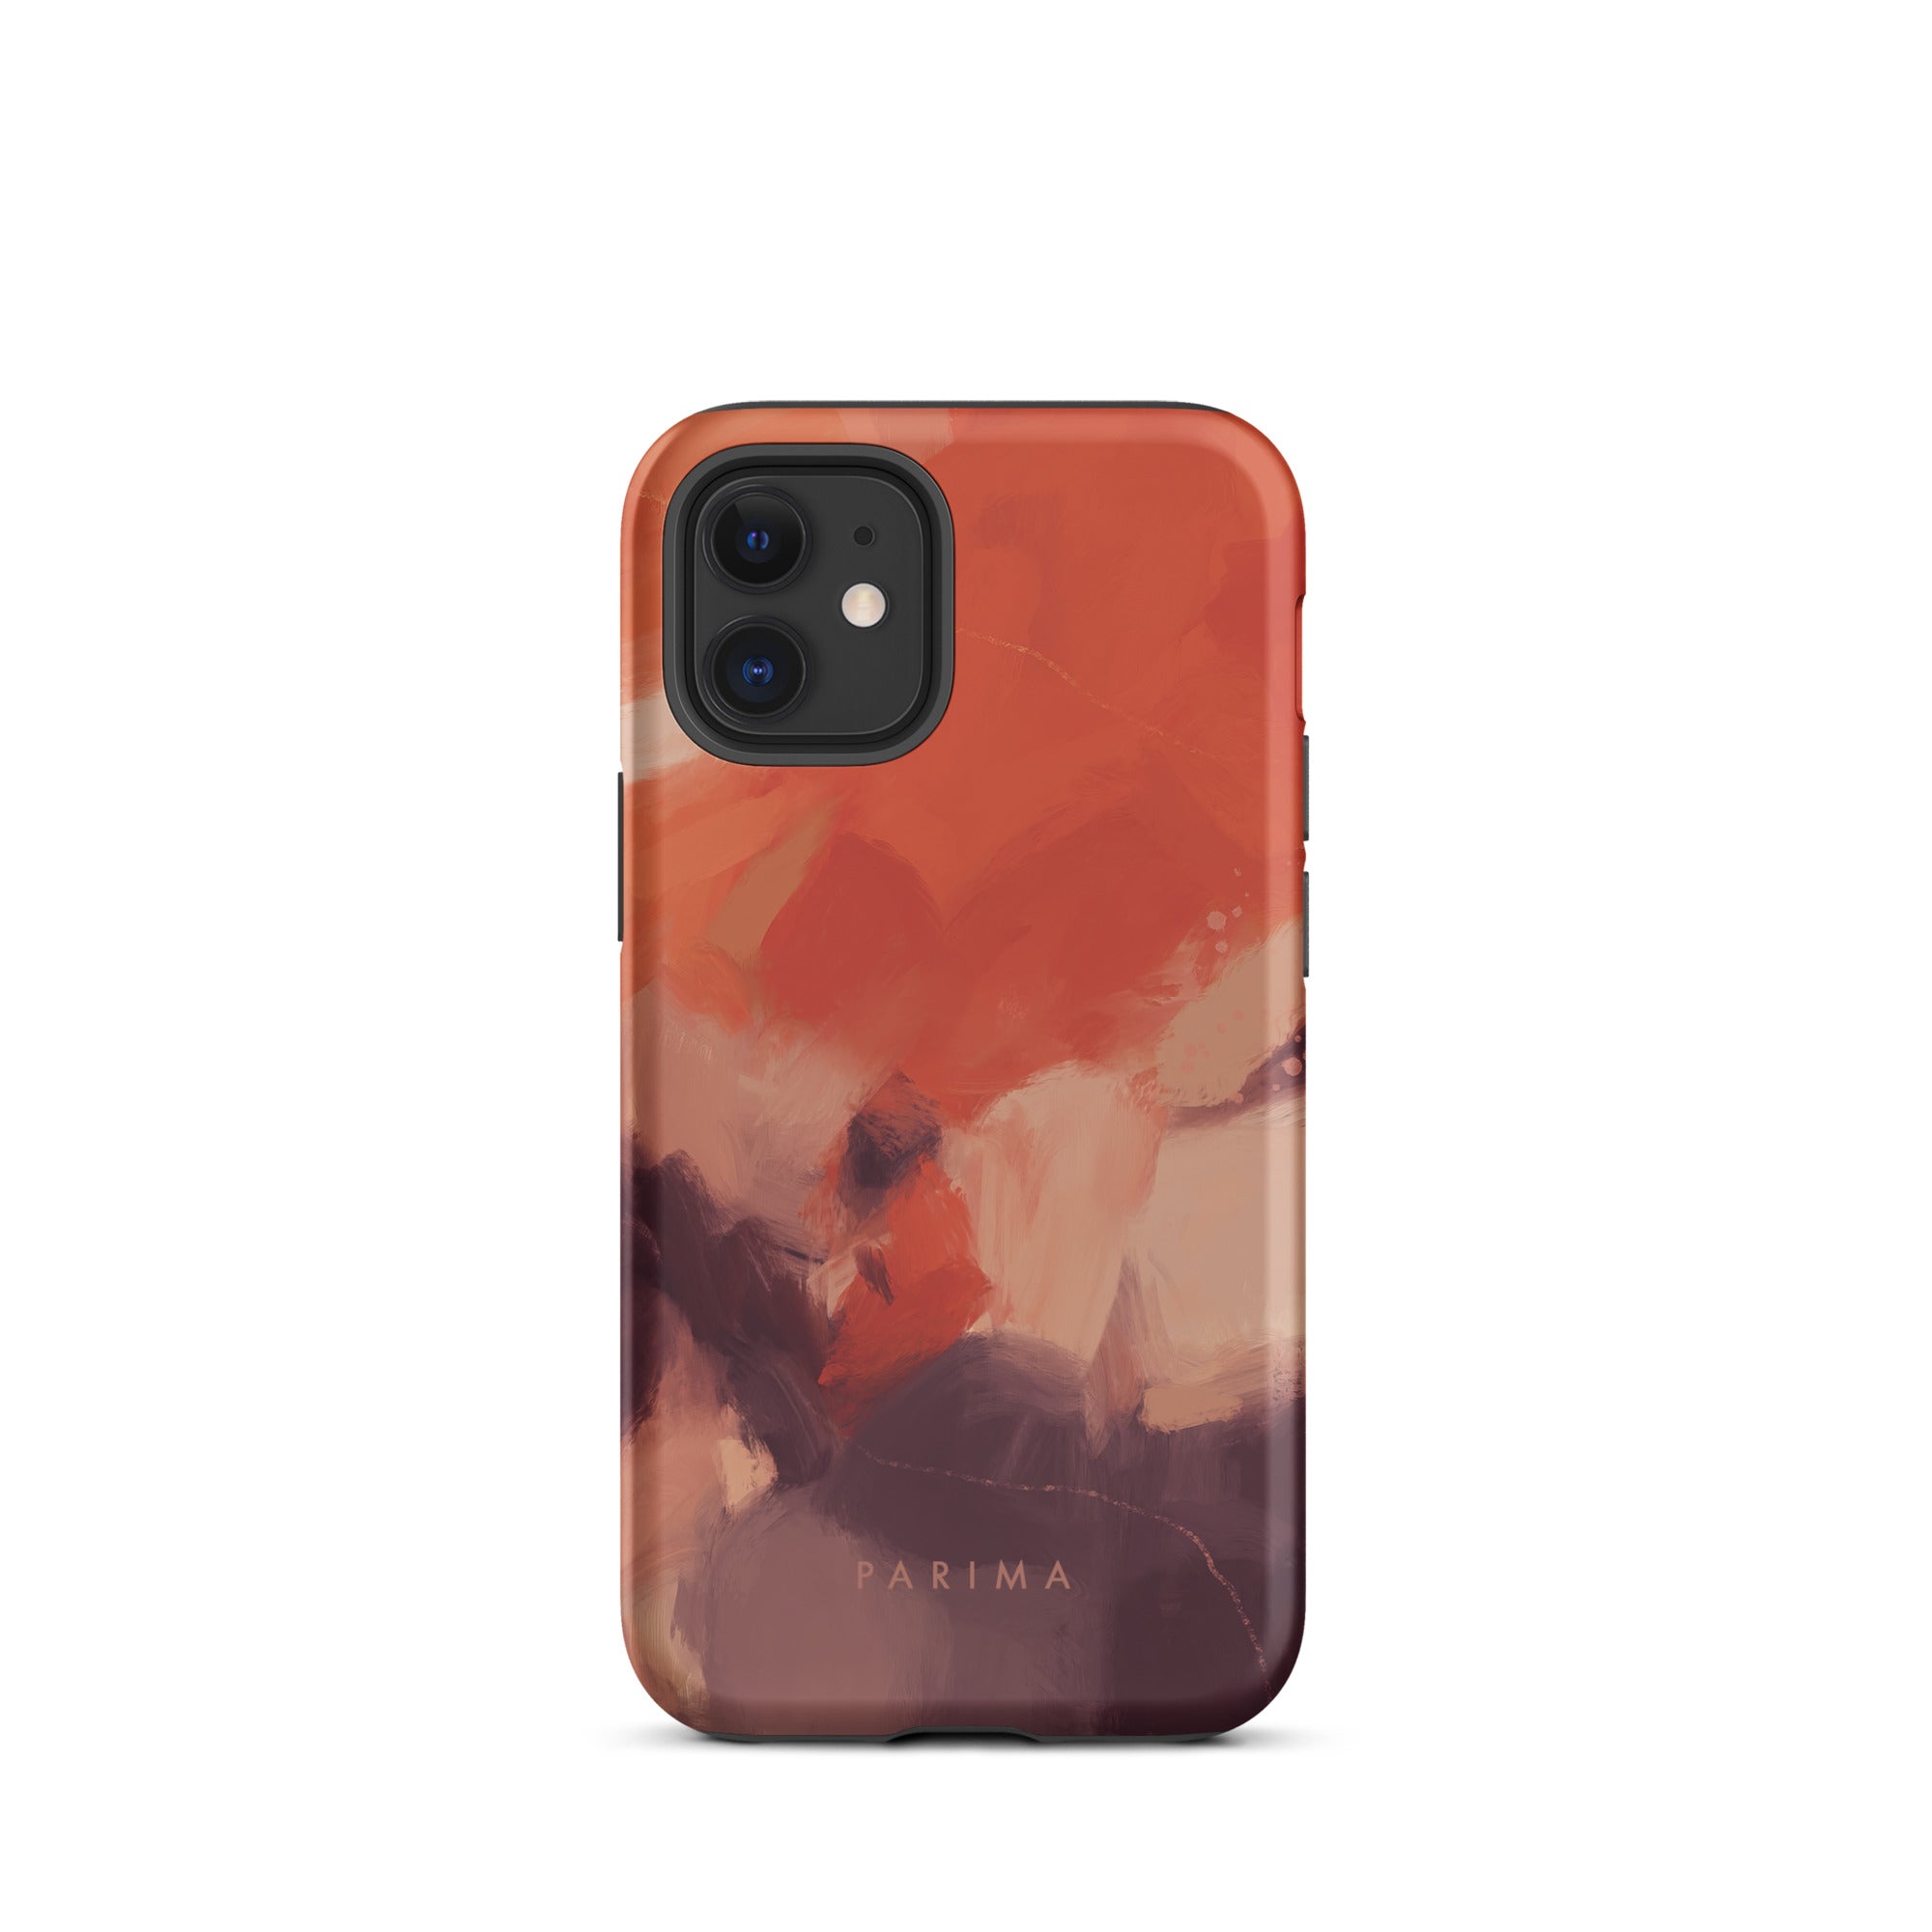 Autumn, orange and purple abstract art - iPhone 12 Mini tough case by Parima Studio